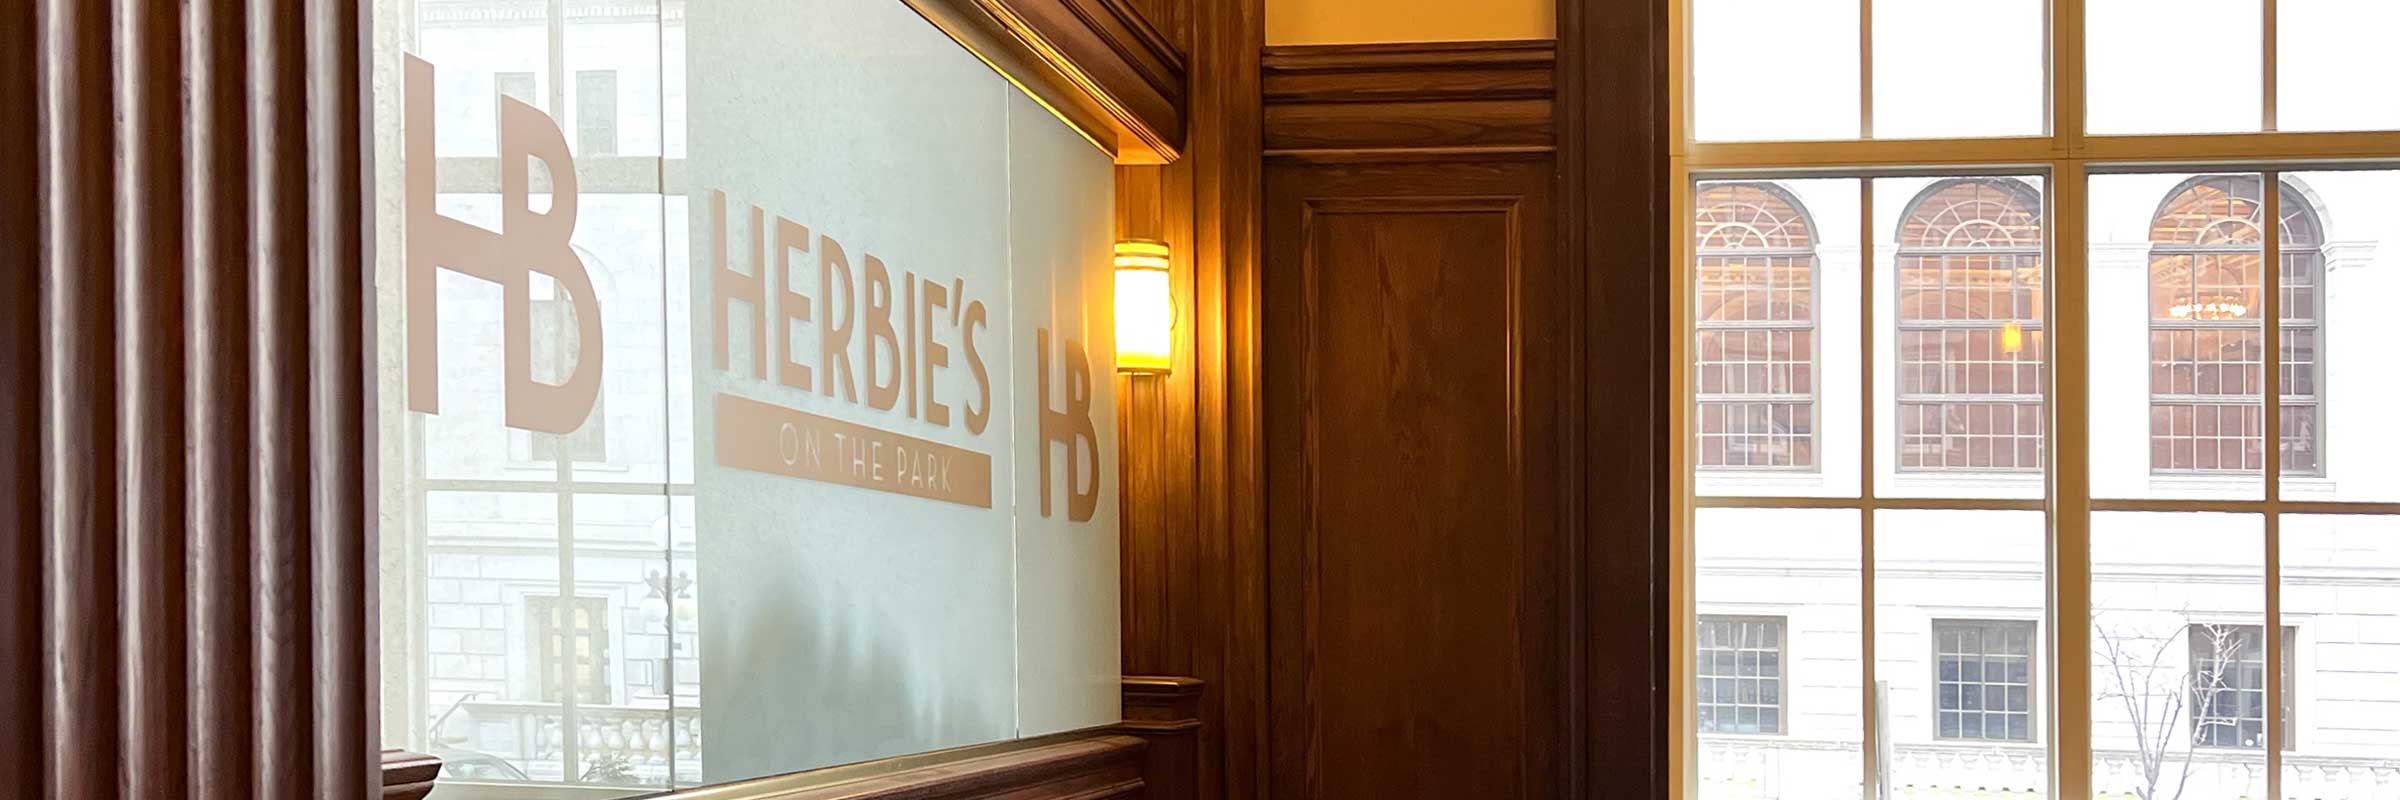 Herbies Entrance - Desktop